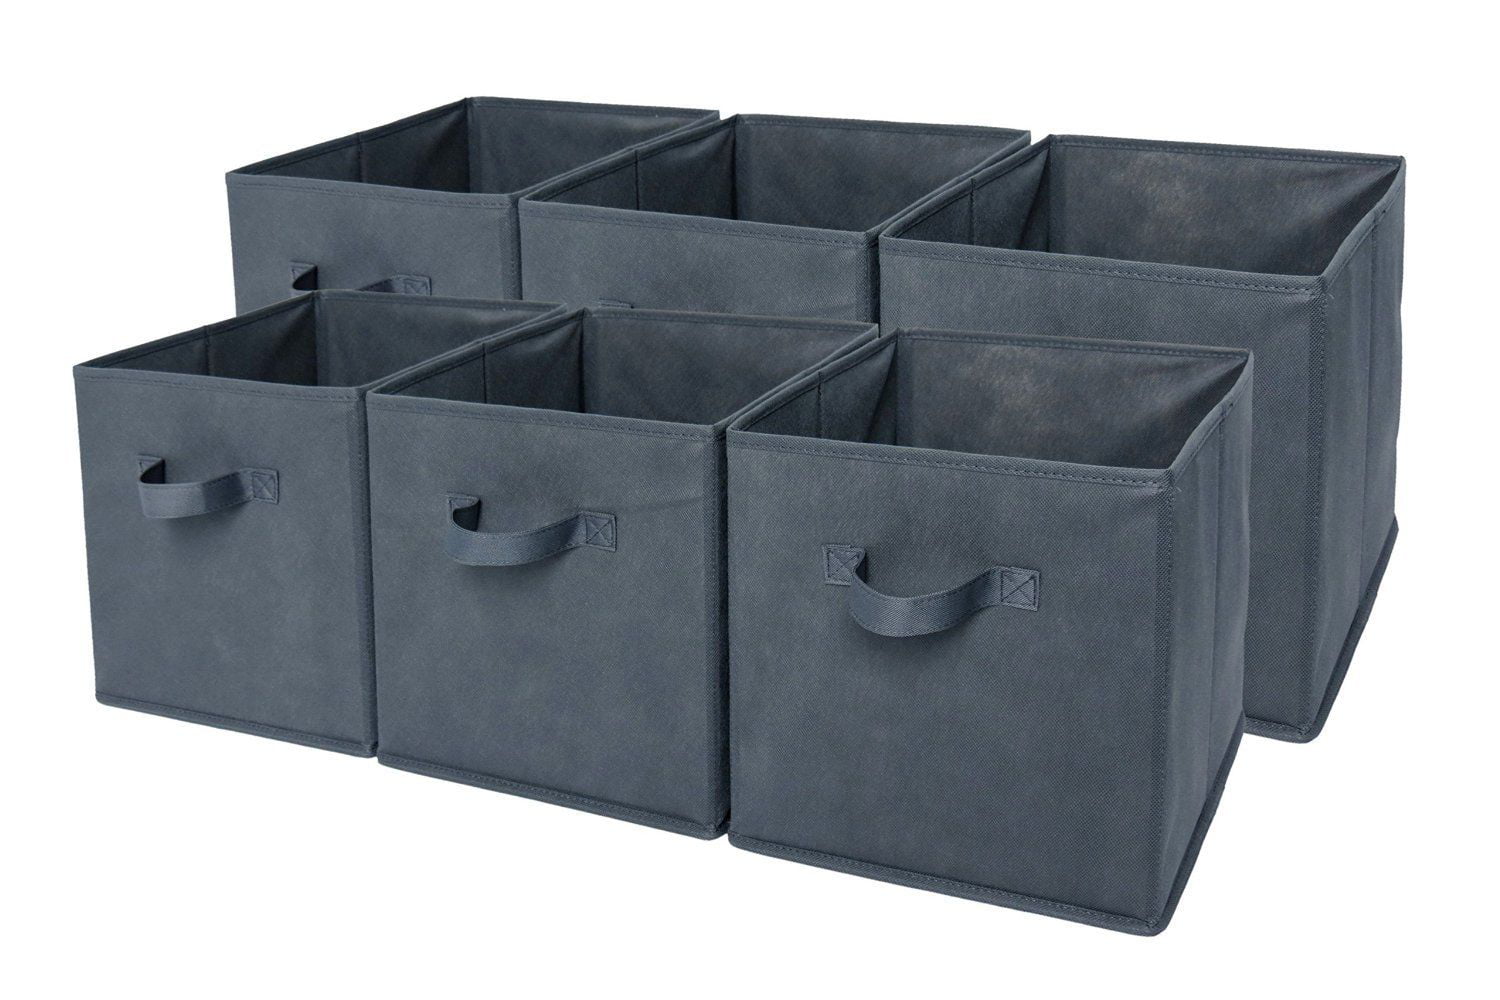 6 Sodynee Foldable Cloth Storage Cube Basket Bins Organizer Containers Drawers 